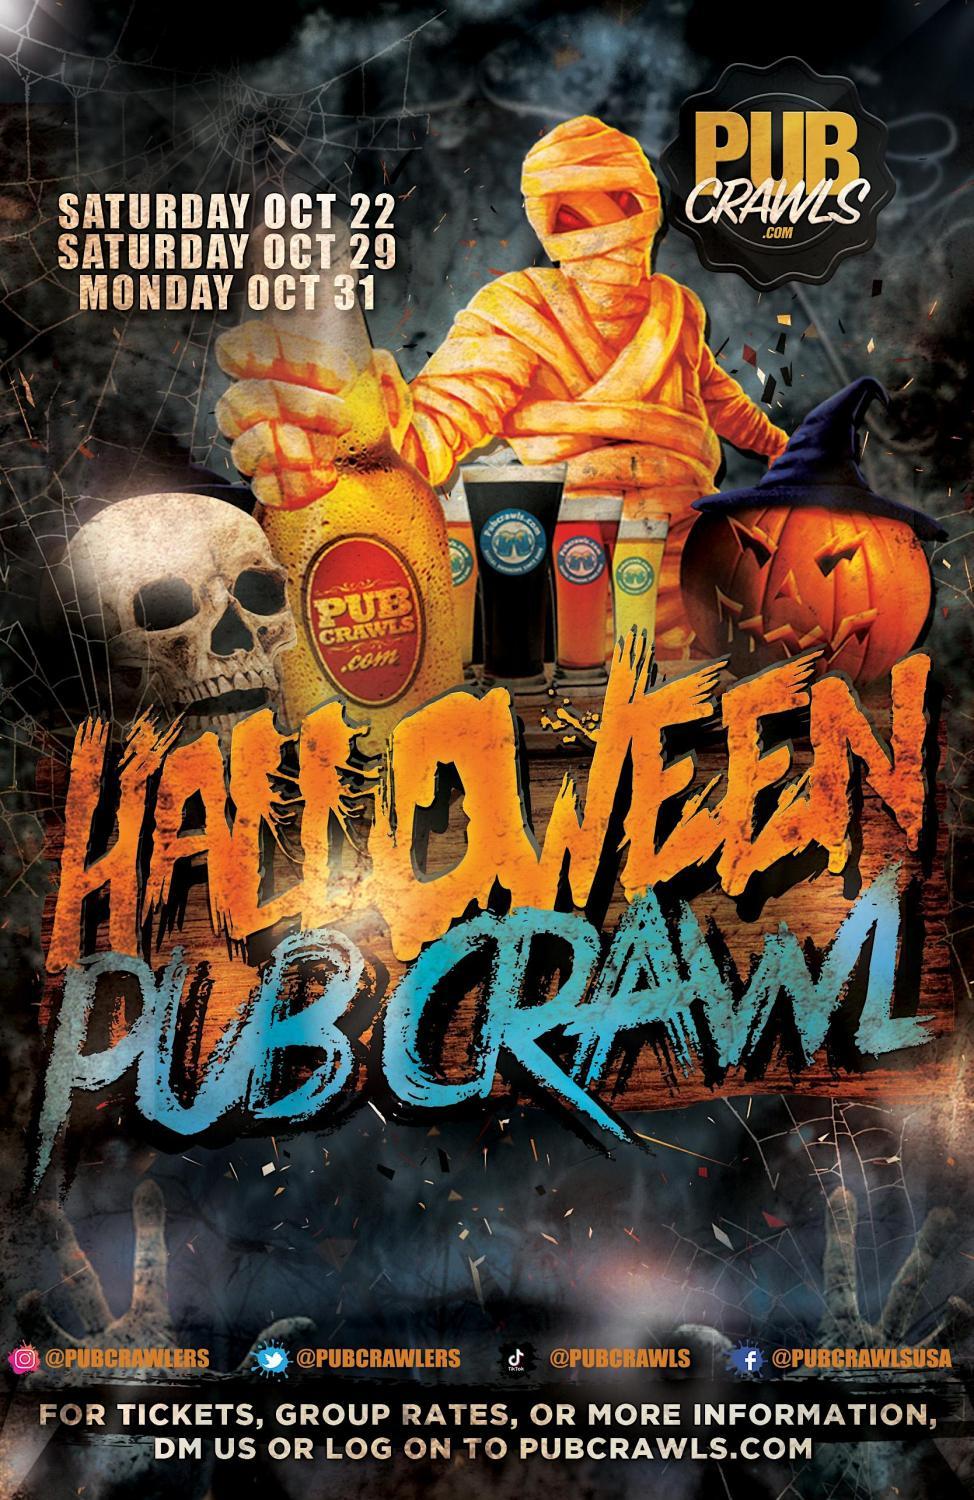 Wichita Halloweekend Hangover Bar Crawl
Sat Oct 22, 1:00 PM - Sat Oct 22, 8:00 PM
in 2 days